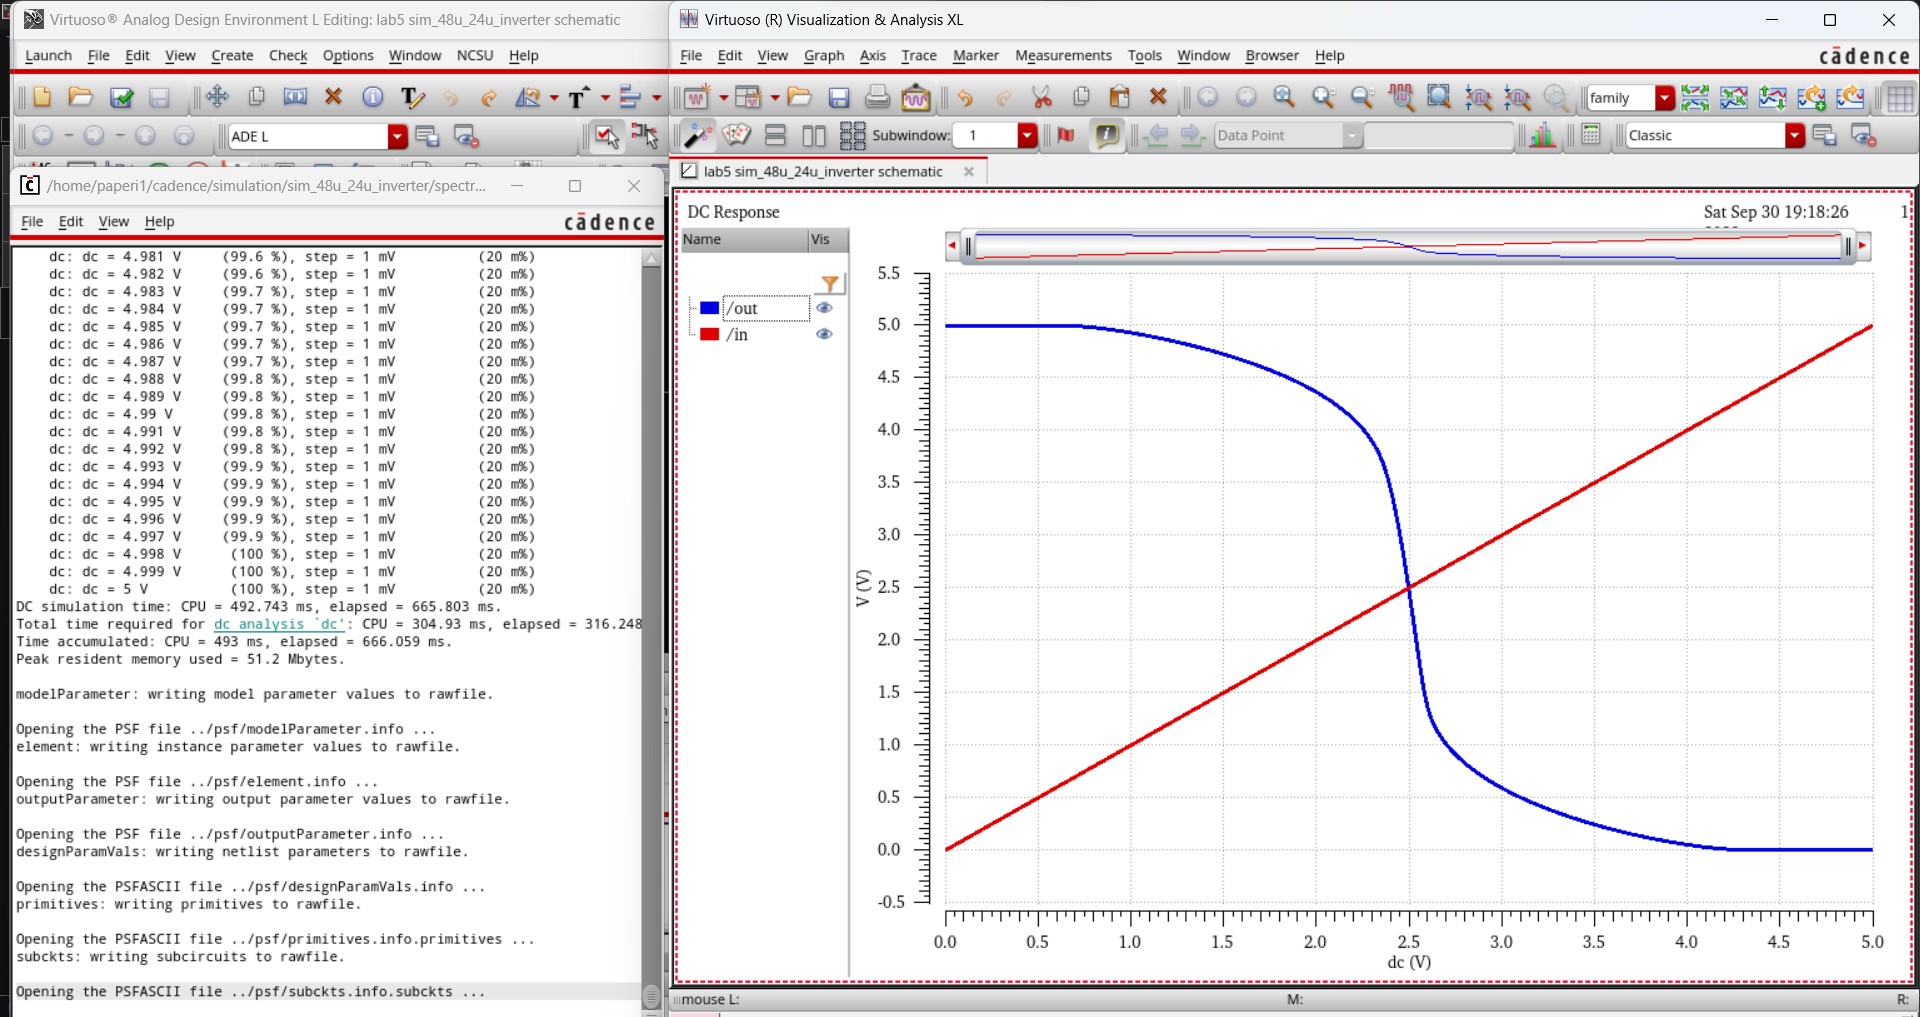 simulation results from 48u/24u inverter schematic